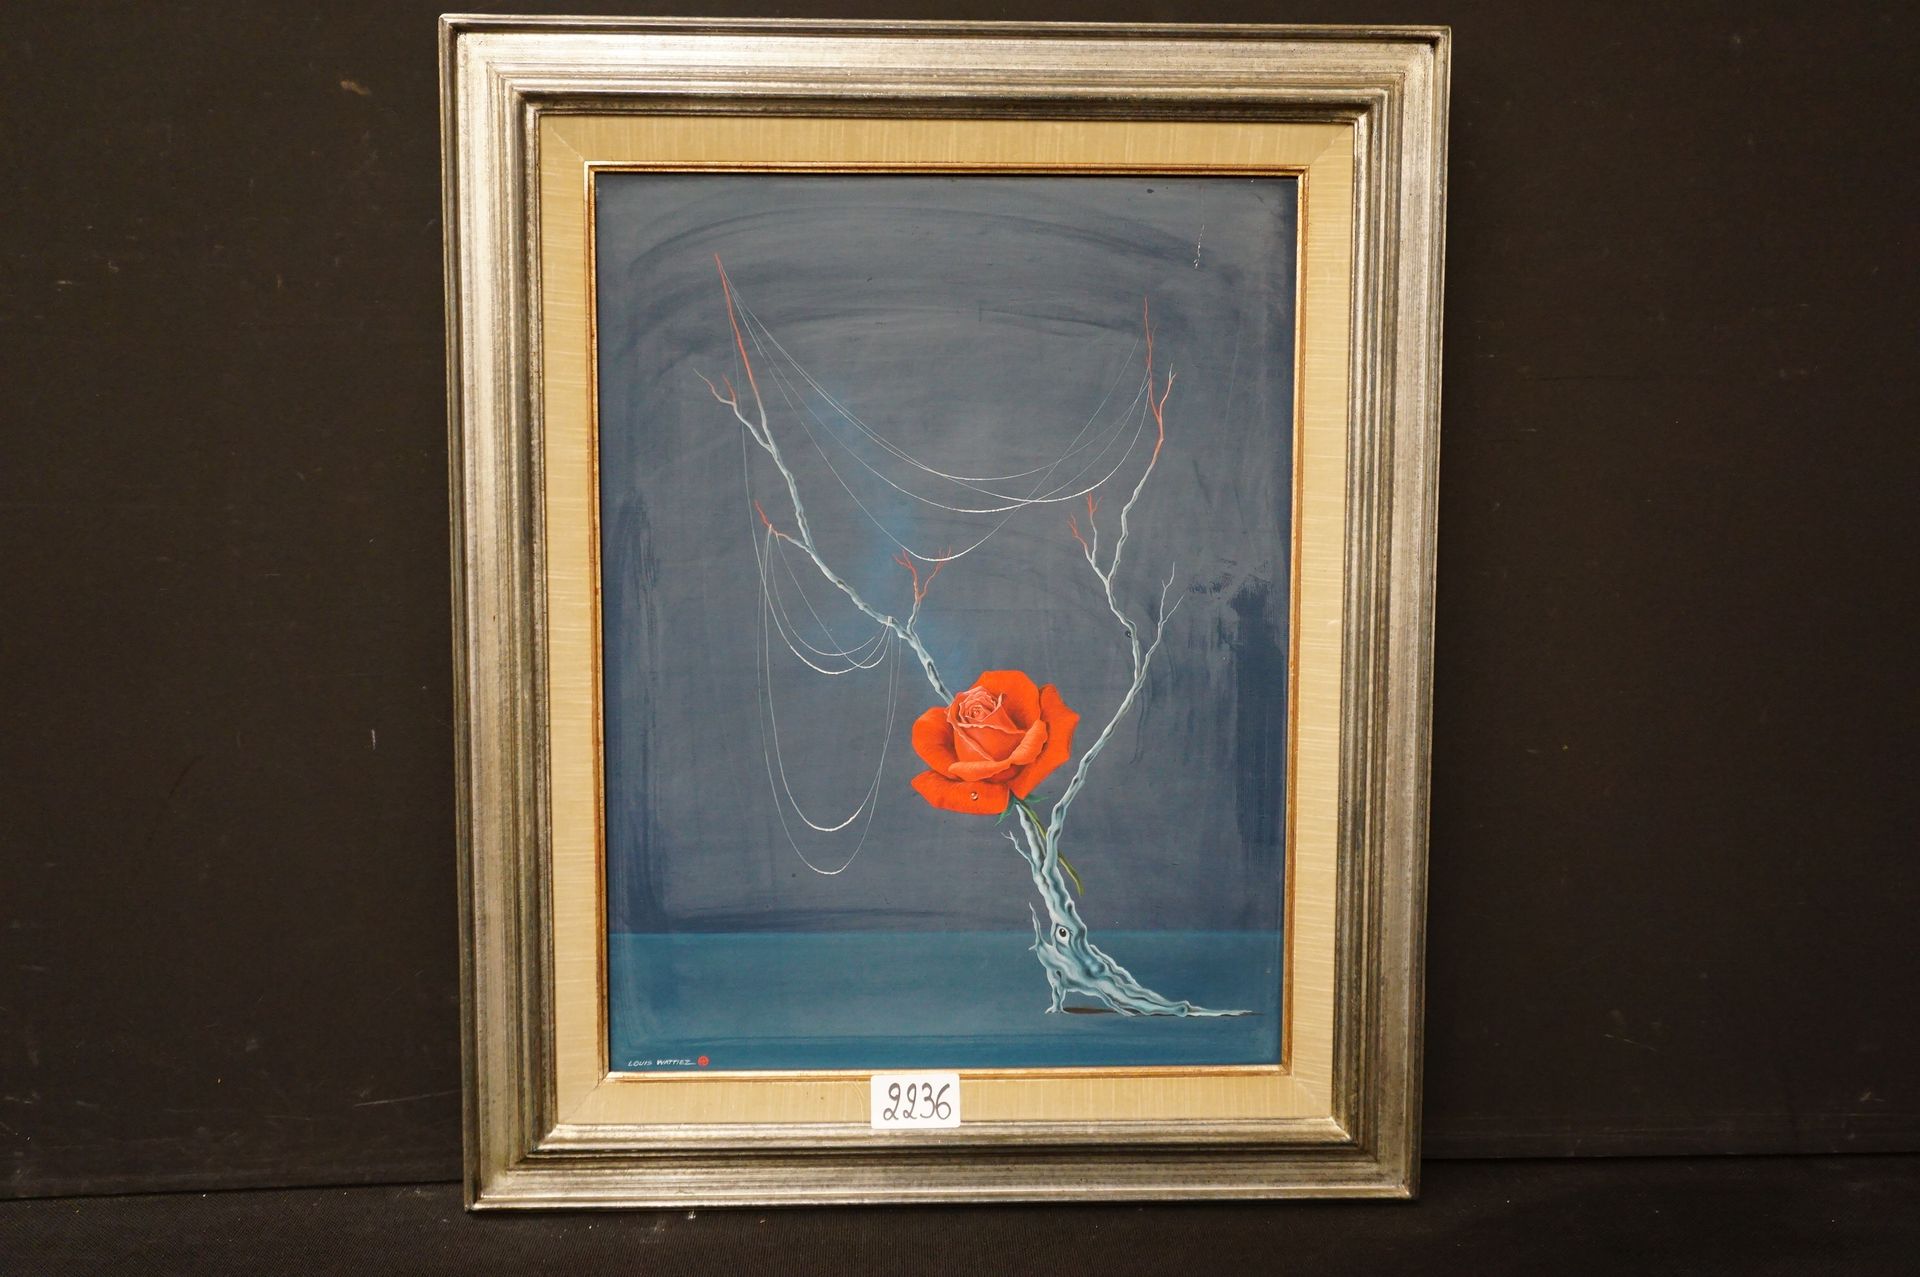 LOUIS WATTIEZ "La rose" - Oil on canvas - Signed - 65 x 50 cm